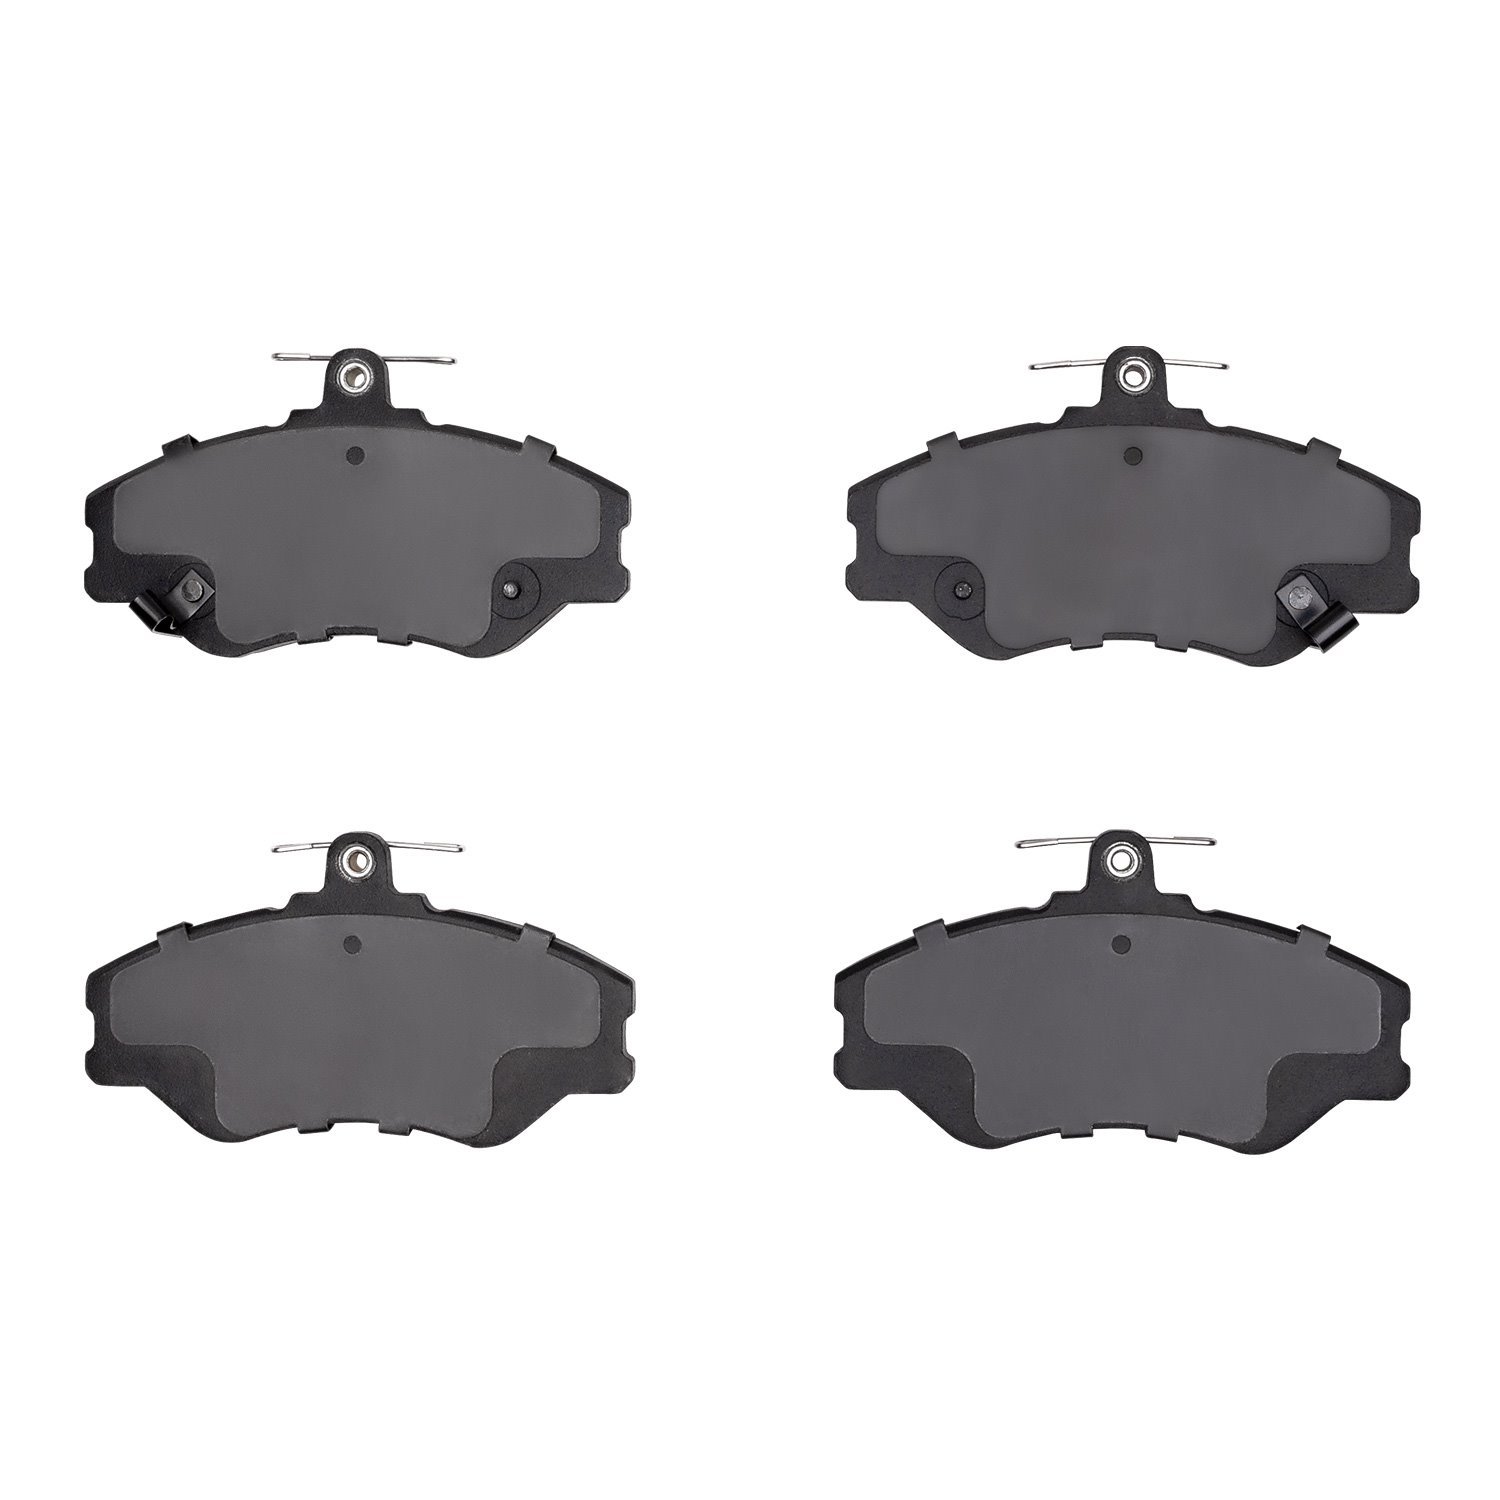 1310-1137-00 3000-Series Ceramic Brake Pads, 2003-2005 Mopar, Position: Front